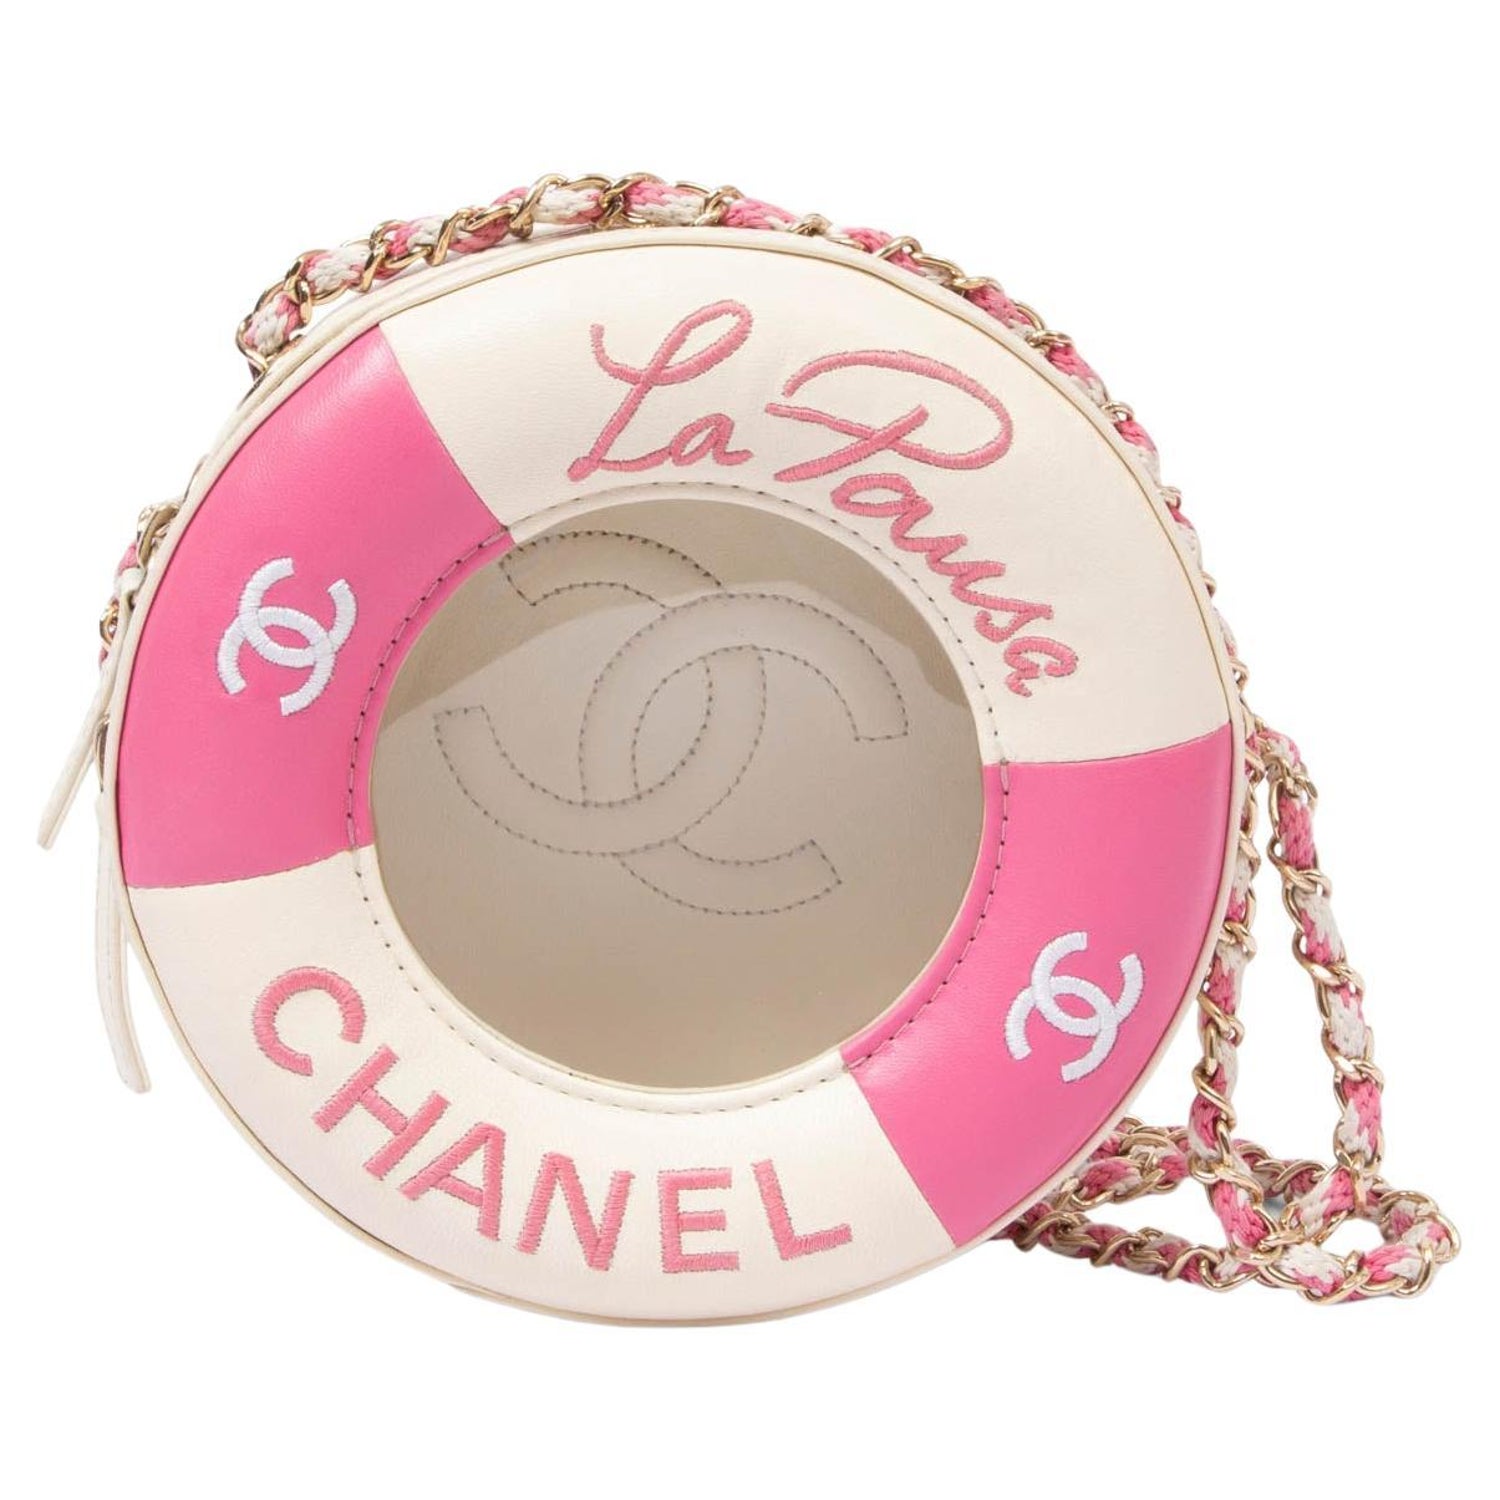 Chanel Lifesaver - For Sale on 1stDibs